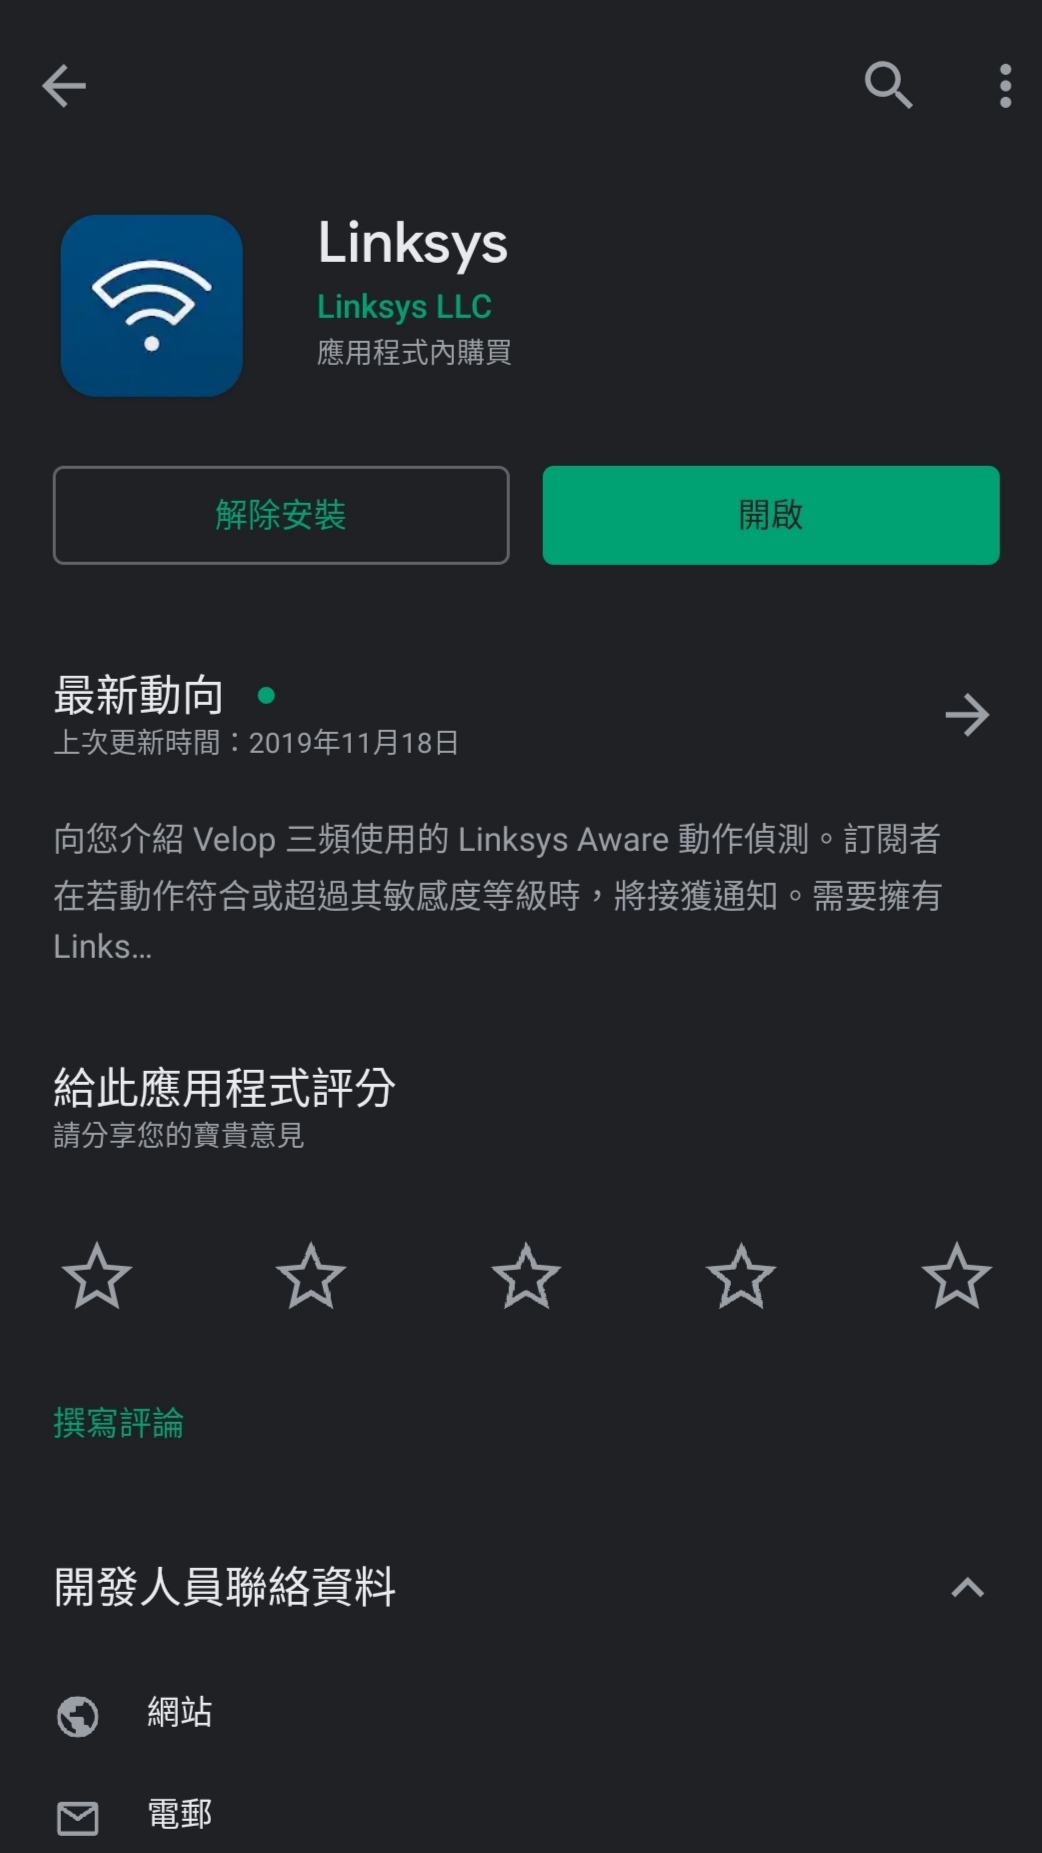 LINKSYS App Play Store